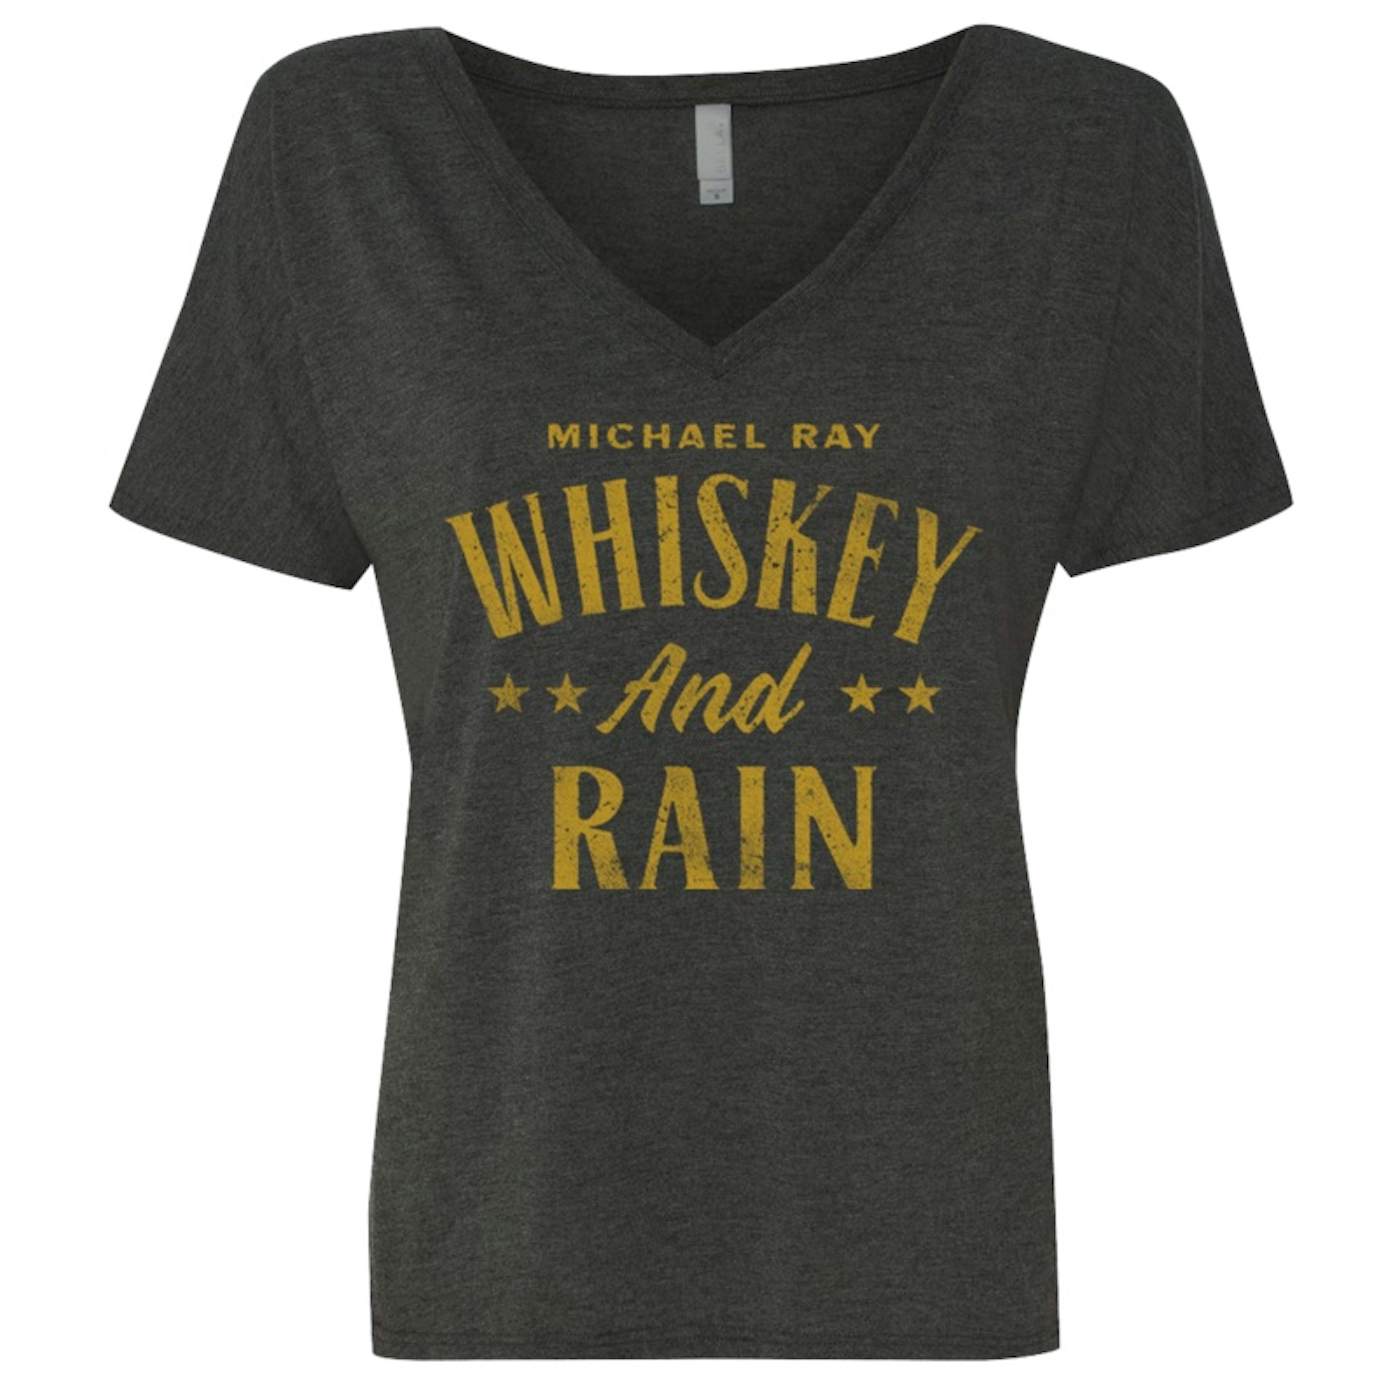 Michael Ray Whiskey And Rain Ladies T-Shirt